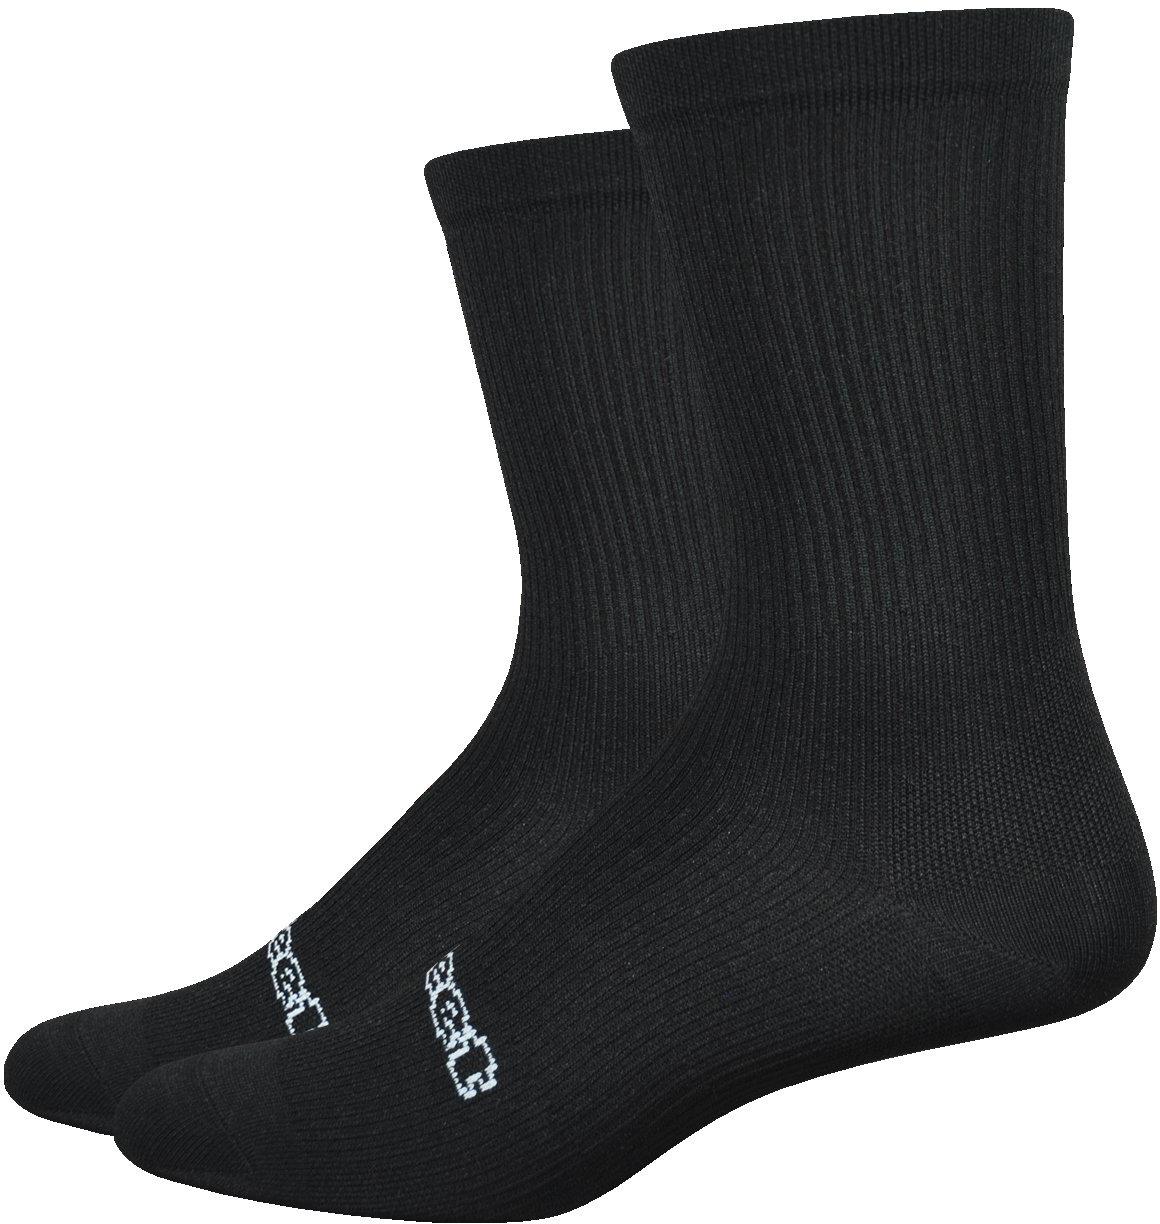 Defeet Evo Classique Socks  Black